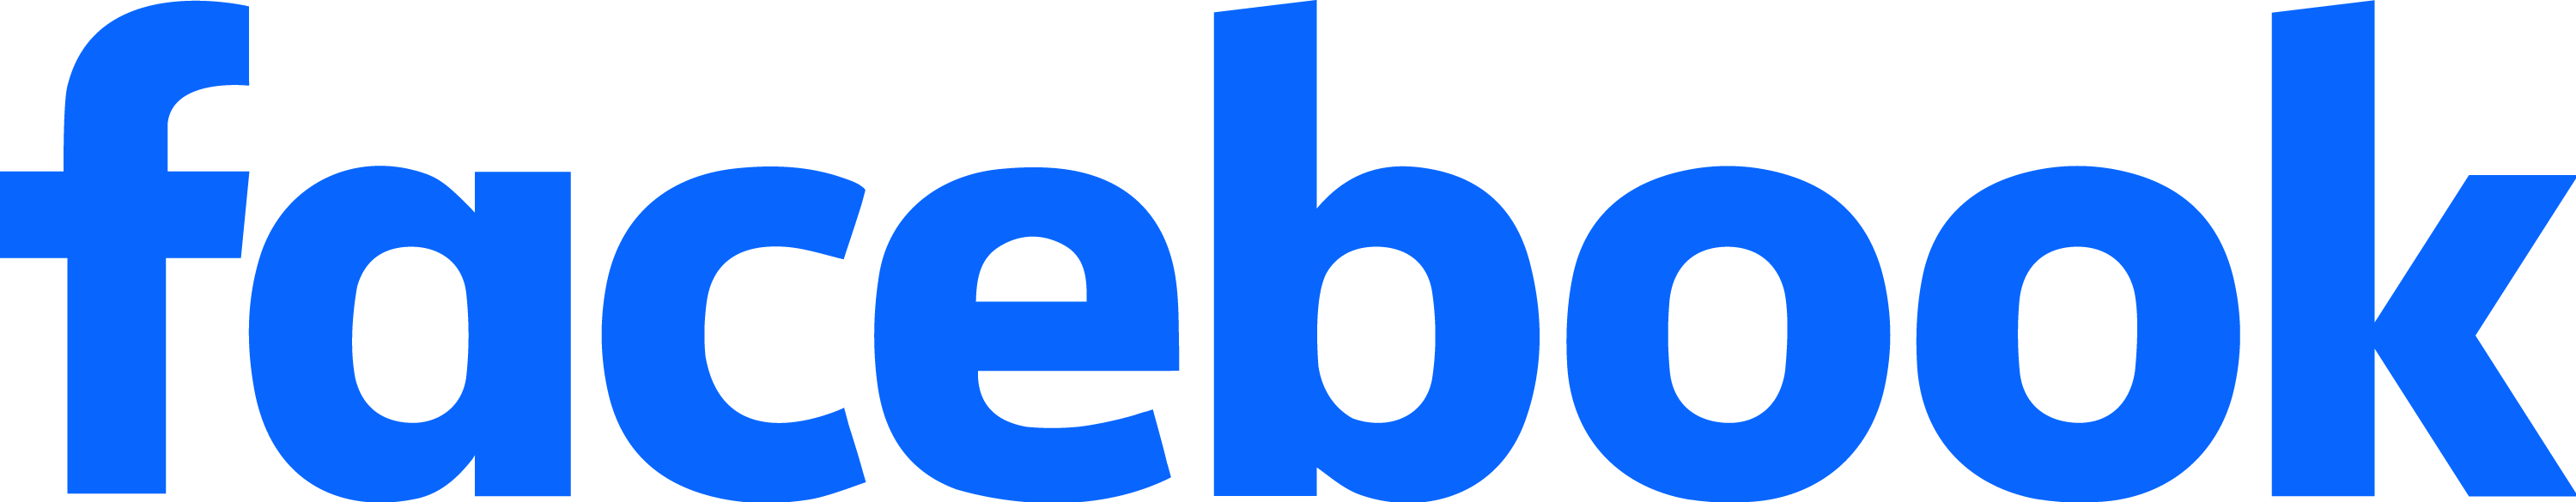 facebook name logo png